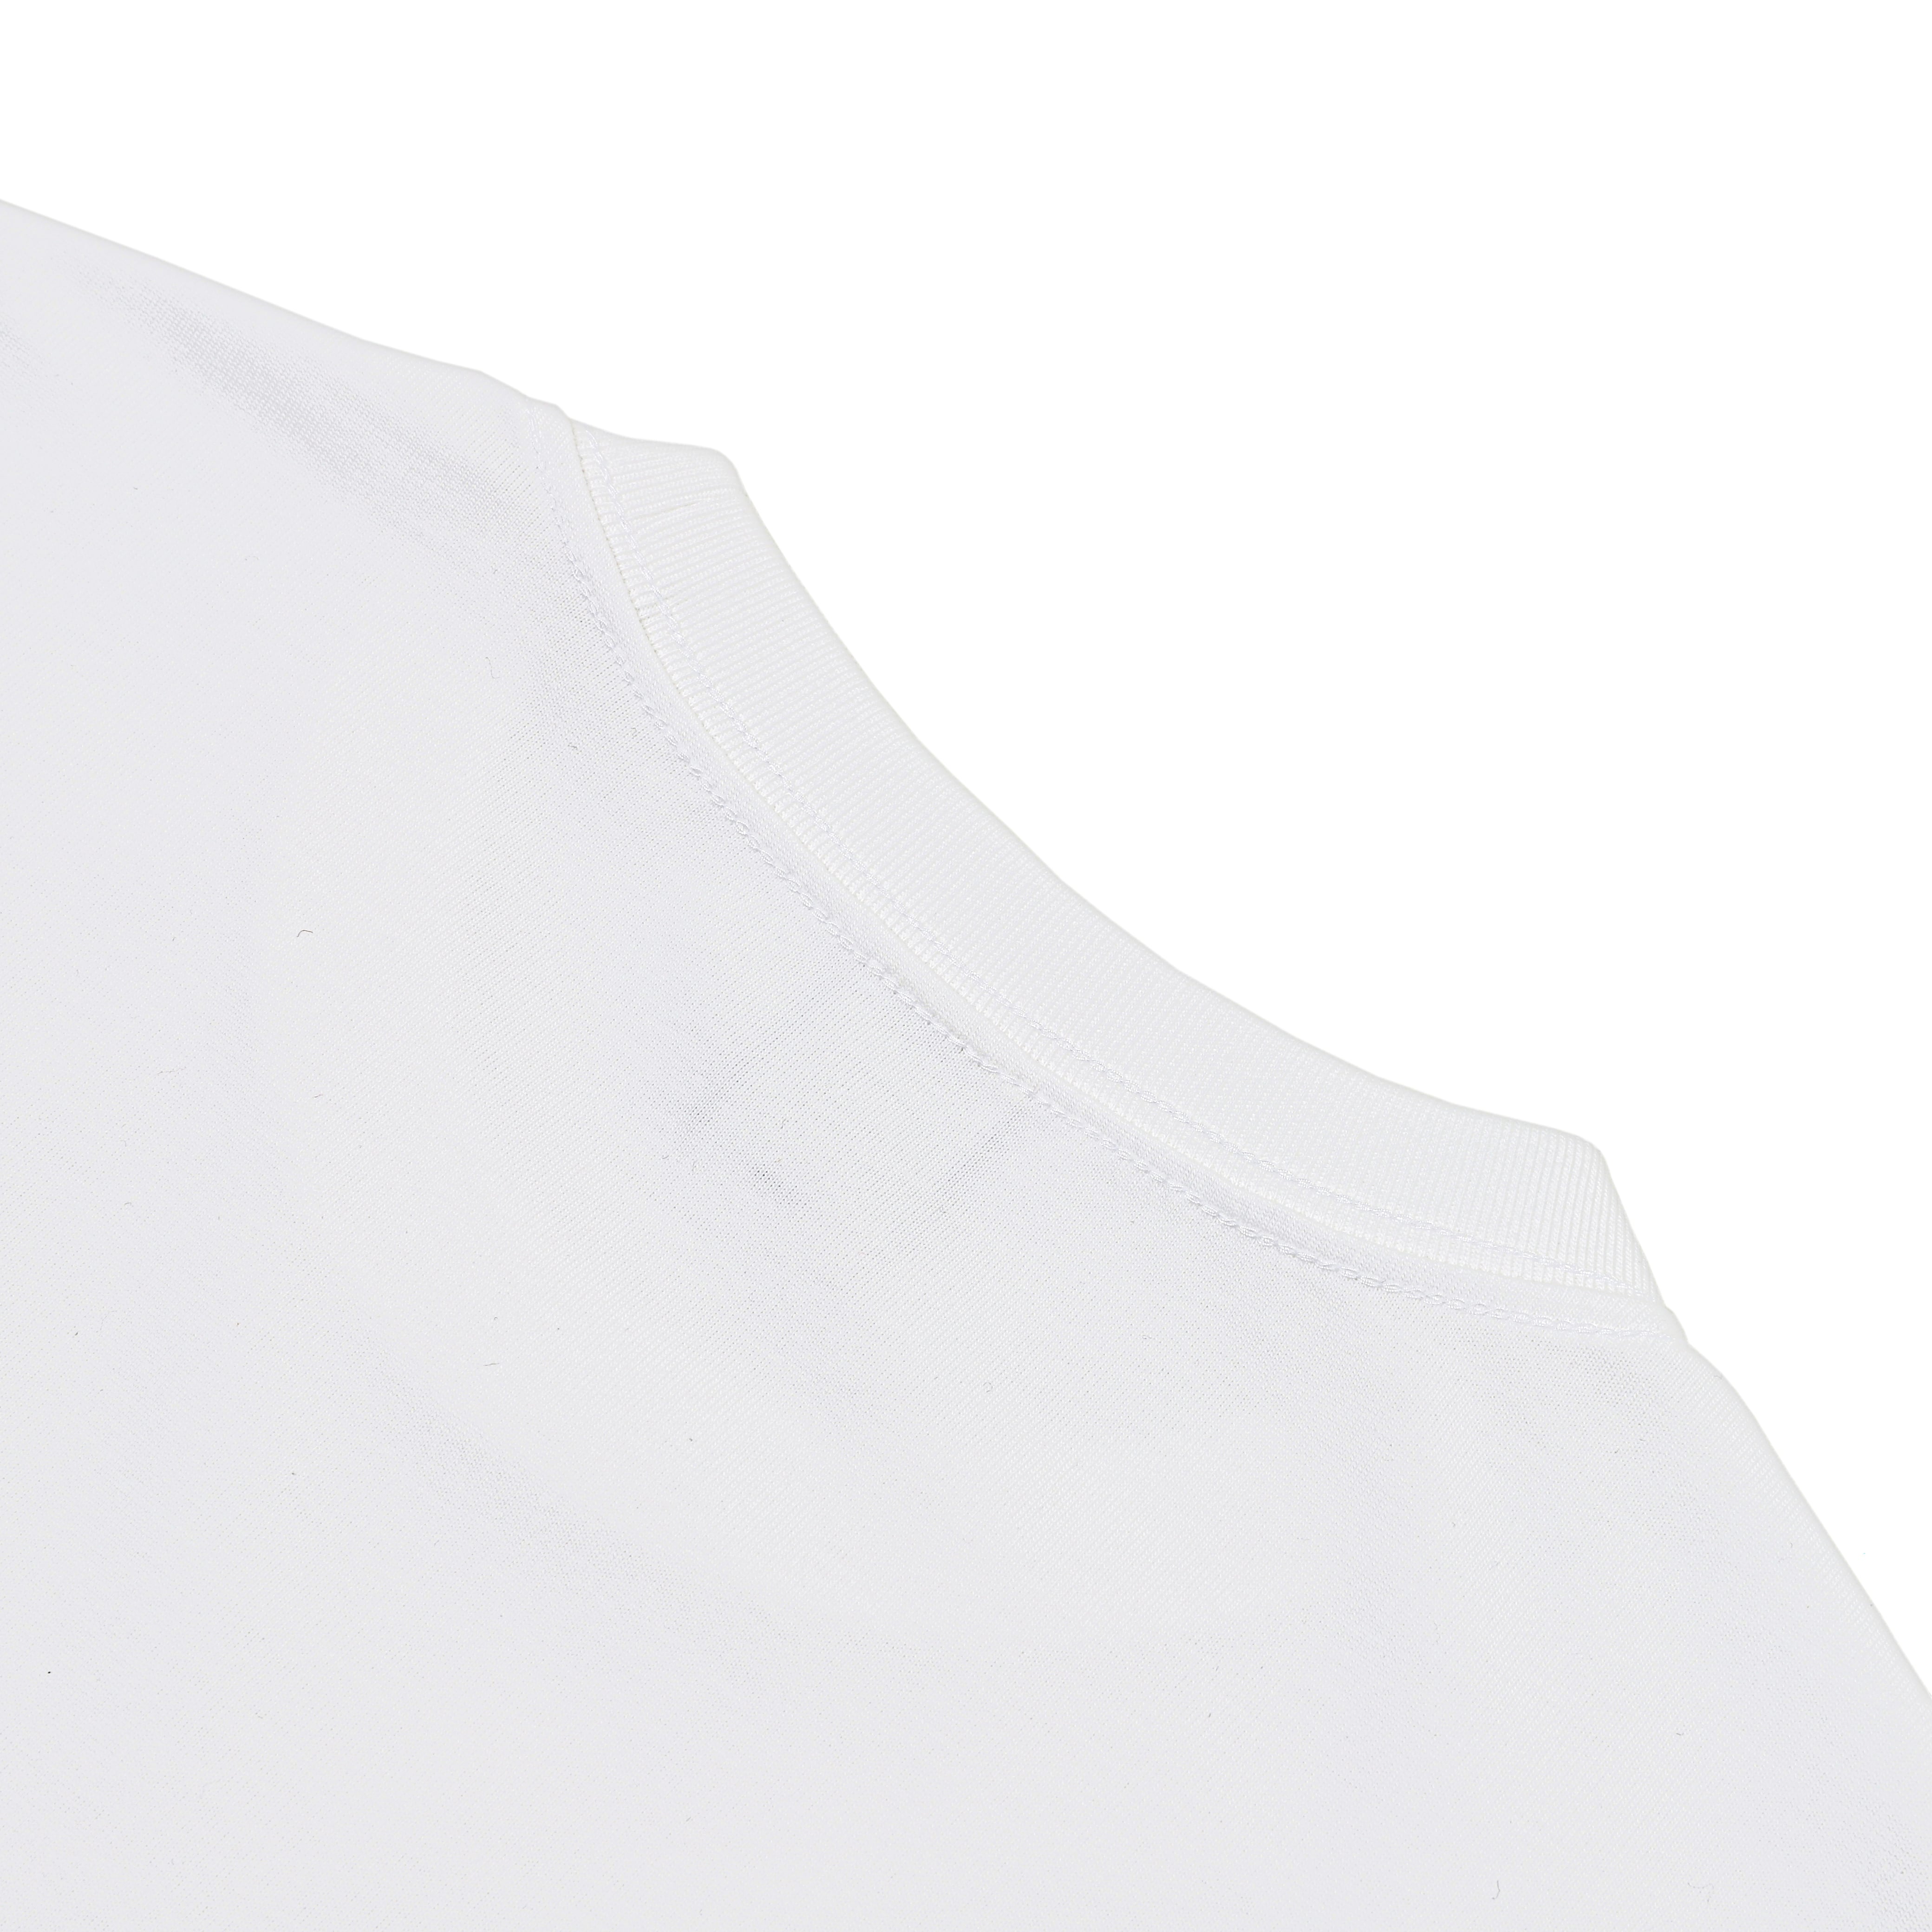 Fine Cotton Basic 3pac T-shirts (white&black)